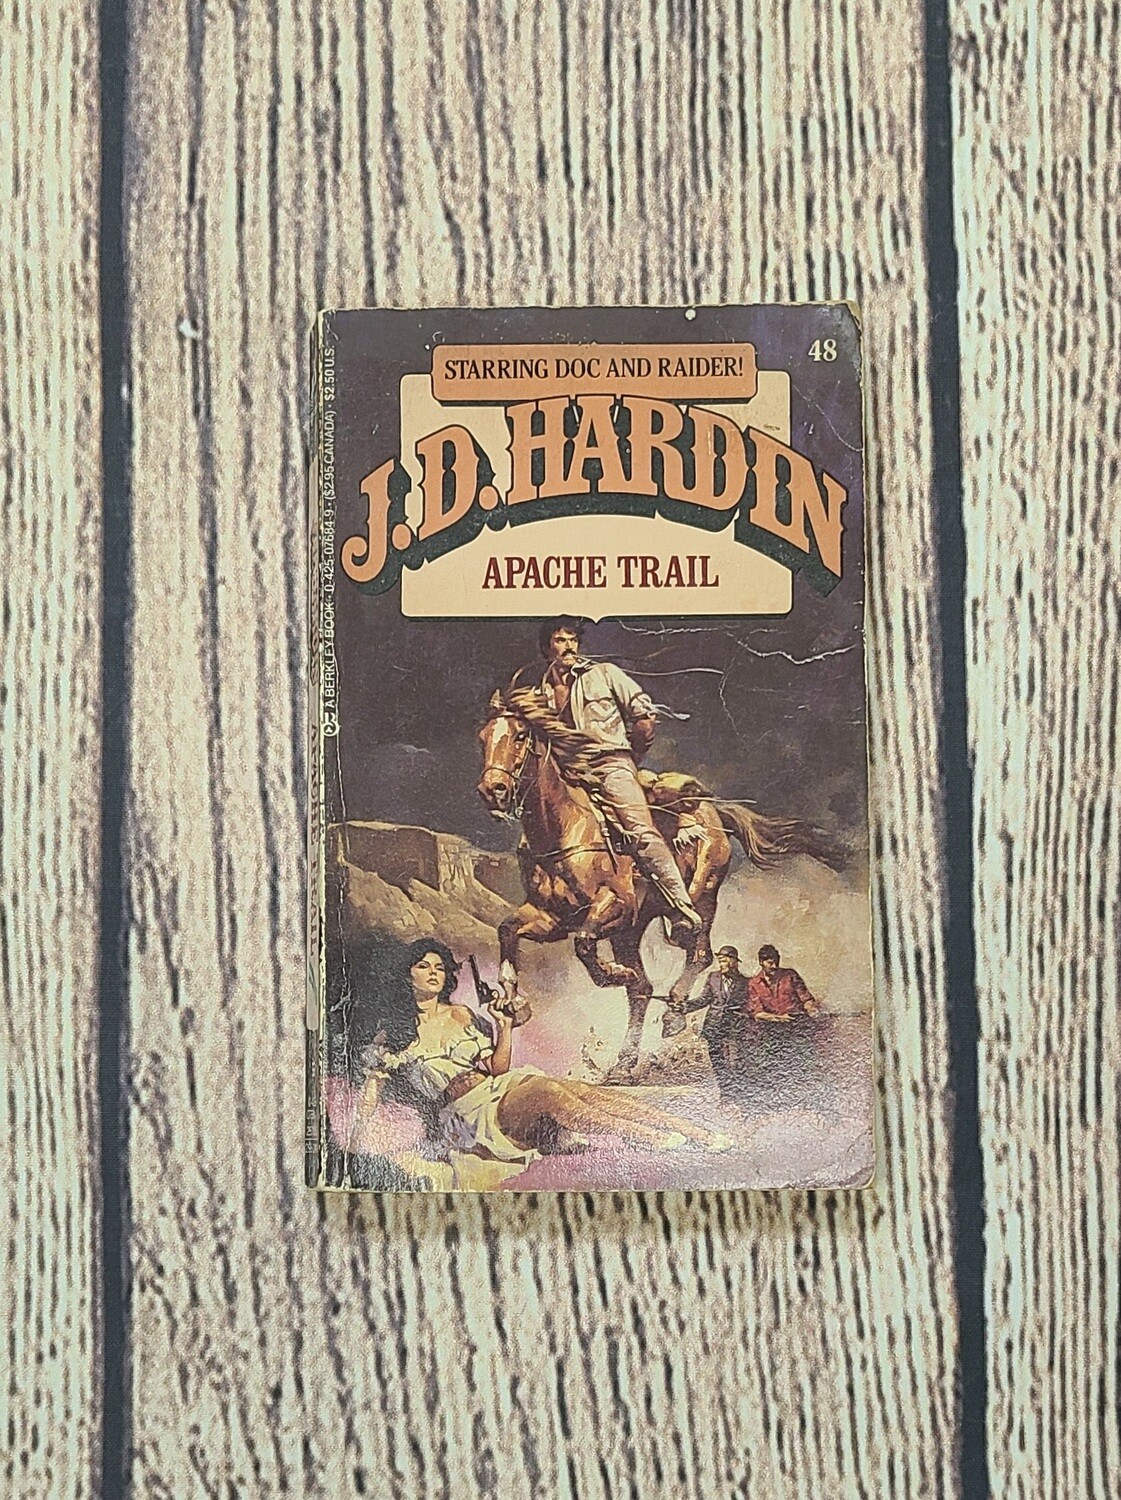 Apache Trail by J.D. Hardin